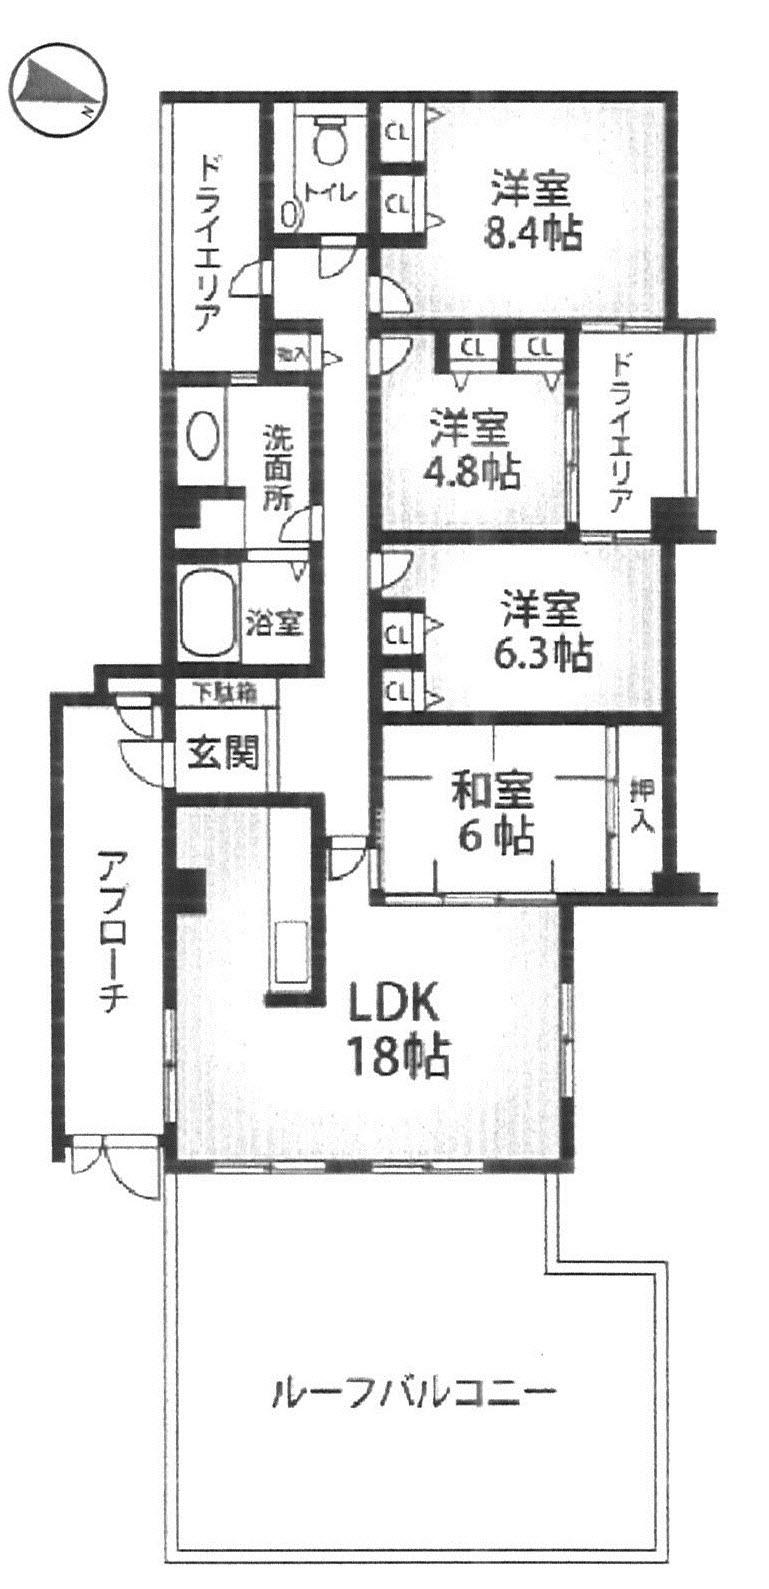 Floor plan. 4LDK, Price 17.3 million yen, Footprint 101.85 sq m